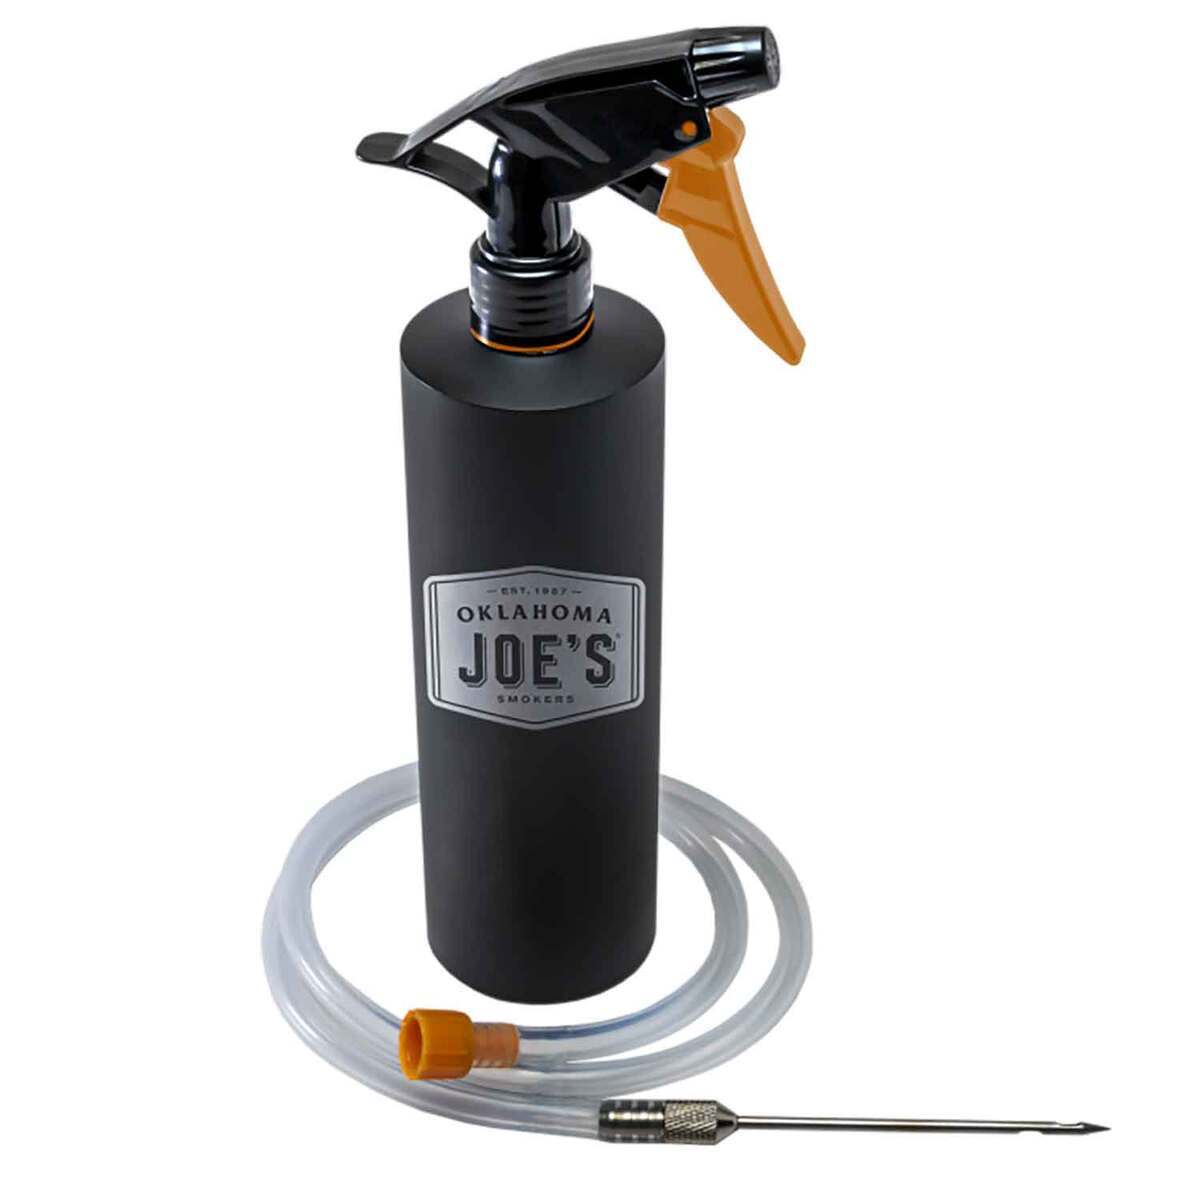 https://www.sportsmans.com/medias/oklahoma-joes-2-in-1-spray-bottle-injector-1714127-1.jpg?context=bWFzdGVyfGltYWdlc3w0MzIwNXxpbWFnZS9qcGVnfGgwYy9oZDUvMTA0NTE0MDMzNDE4NTQvMTcxNDEyNy0xX2Jhc2UtY29udmVyc2lvbkZvcm1hdF8xMjAwLWNvbnZlcnNpb25Gb3JtYXR8ZDVlN2I1YWQ1NzYxOTYxYTkyNDI4NmU0OTA0M2ZlNjY0MzdhMzgwYTYzZDViYTg1YTlhOWE1NzhlMWM4OTJlNw